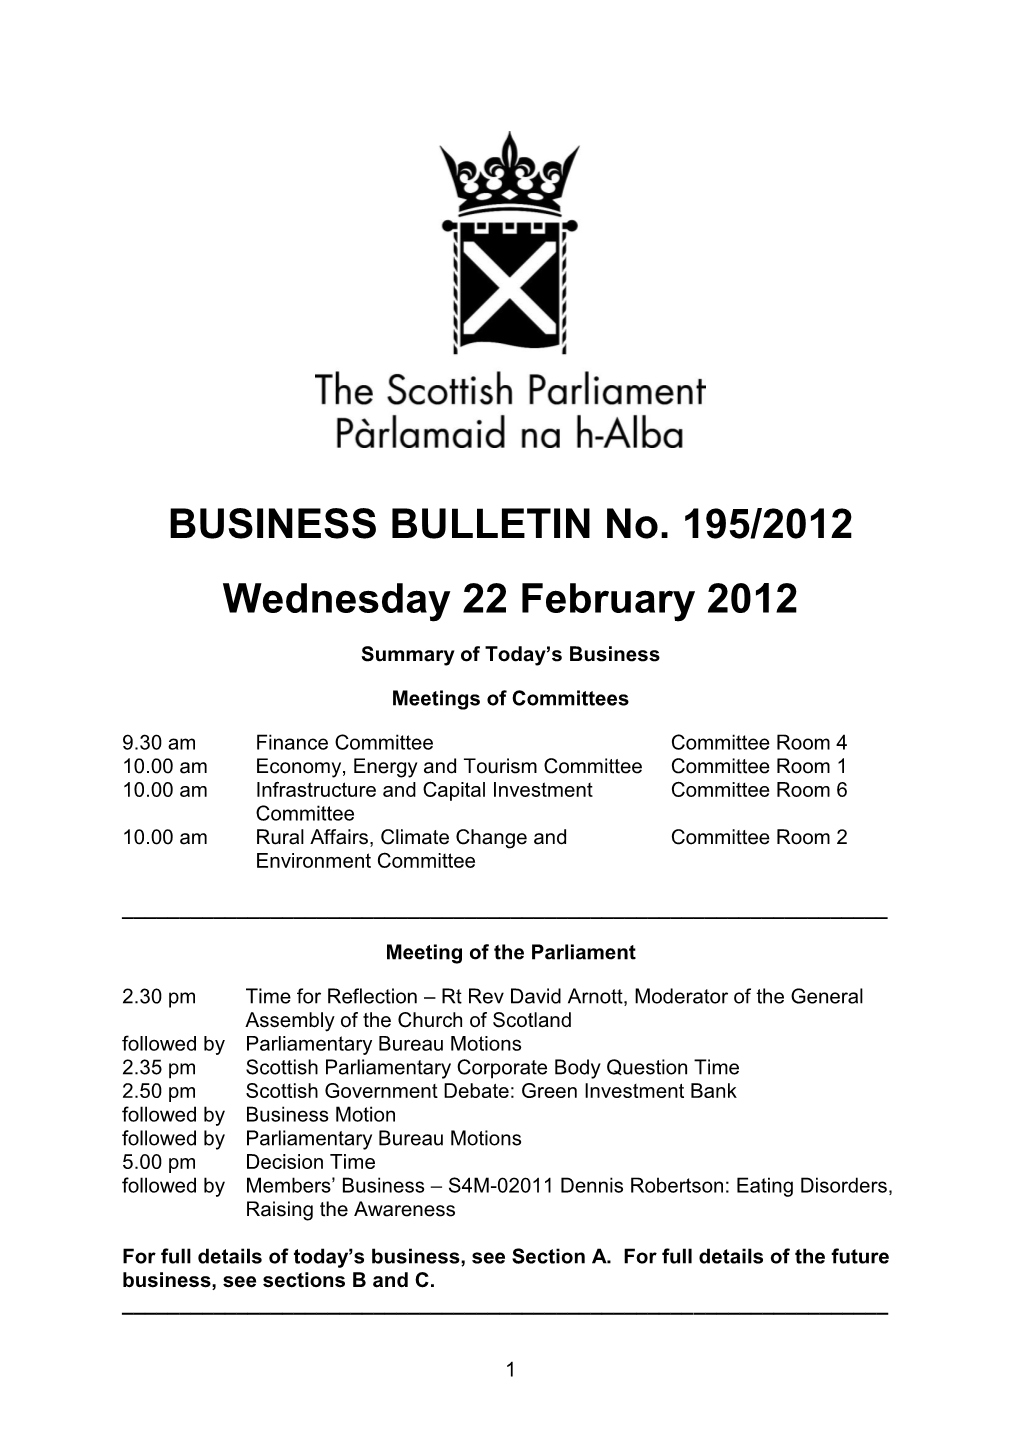 BUSINESS BULLETIN No. 195/2012 Wednesday 22 February 2012